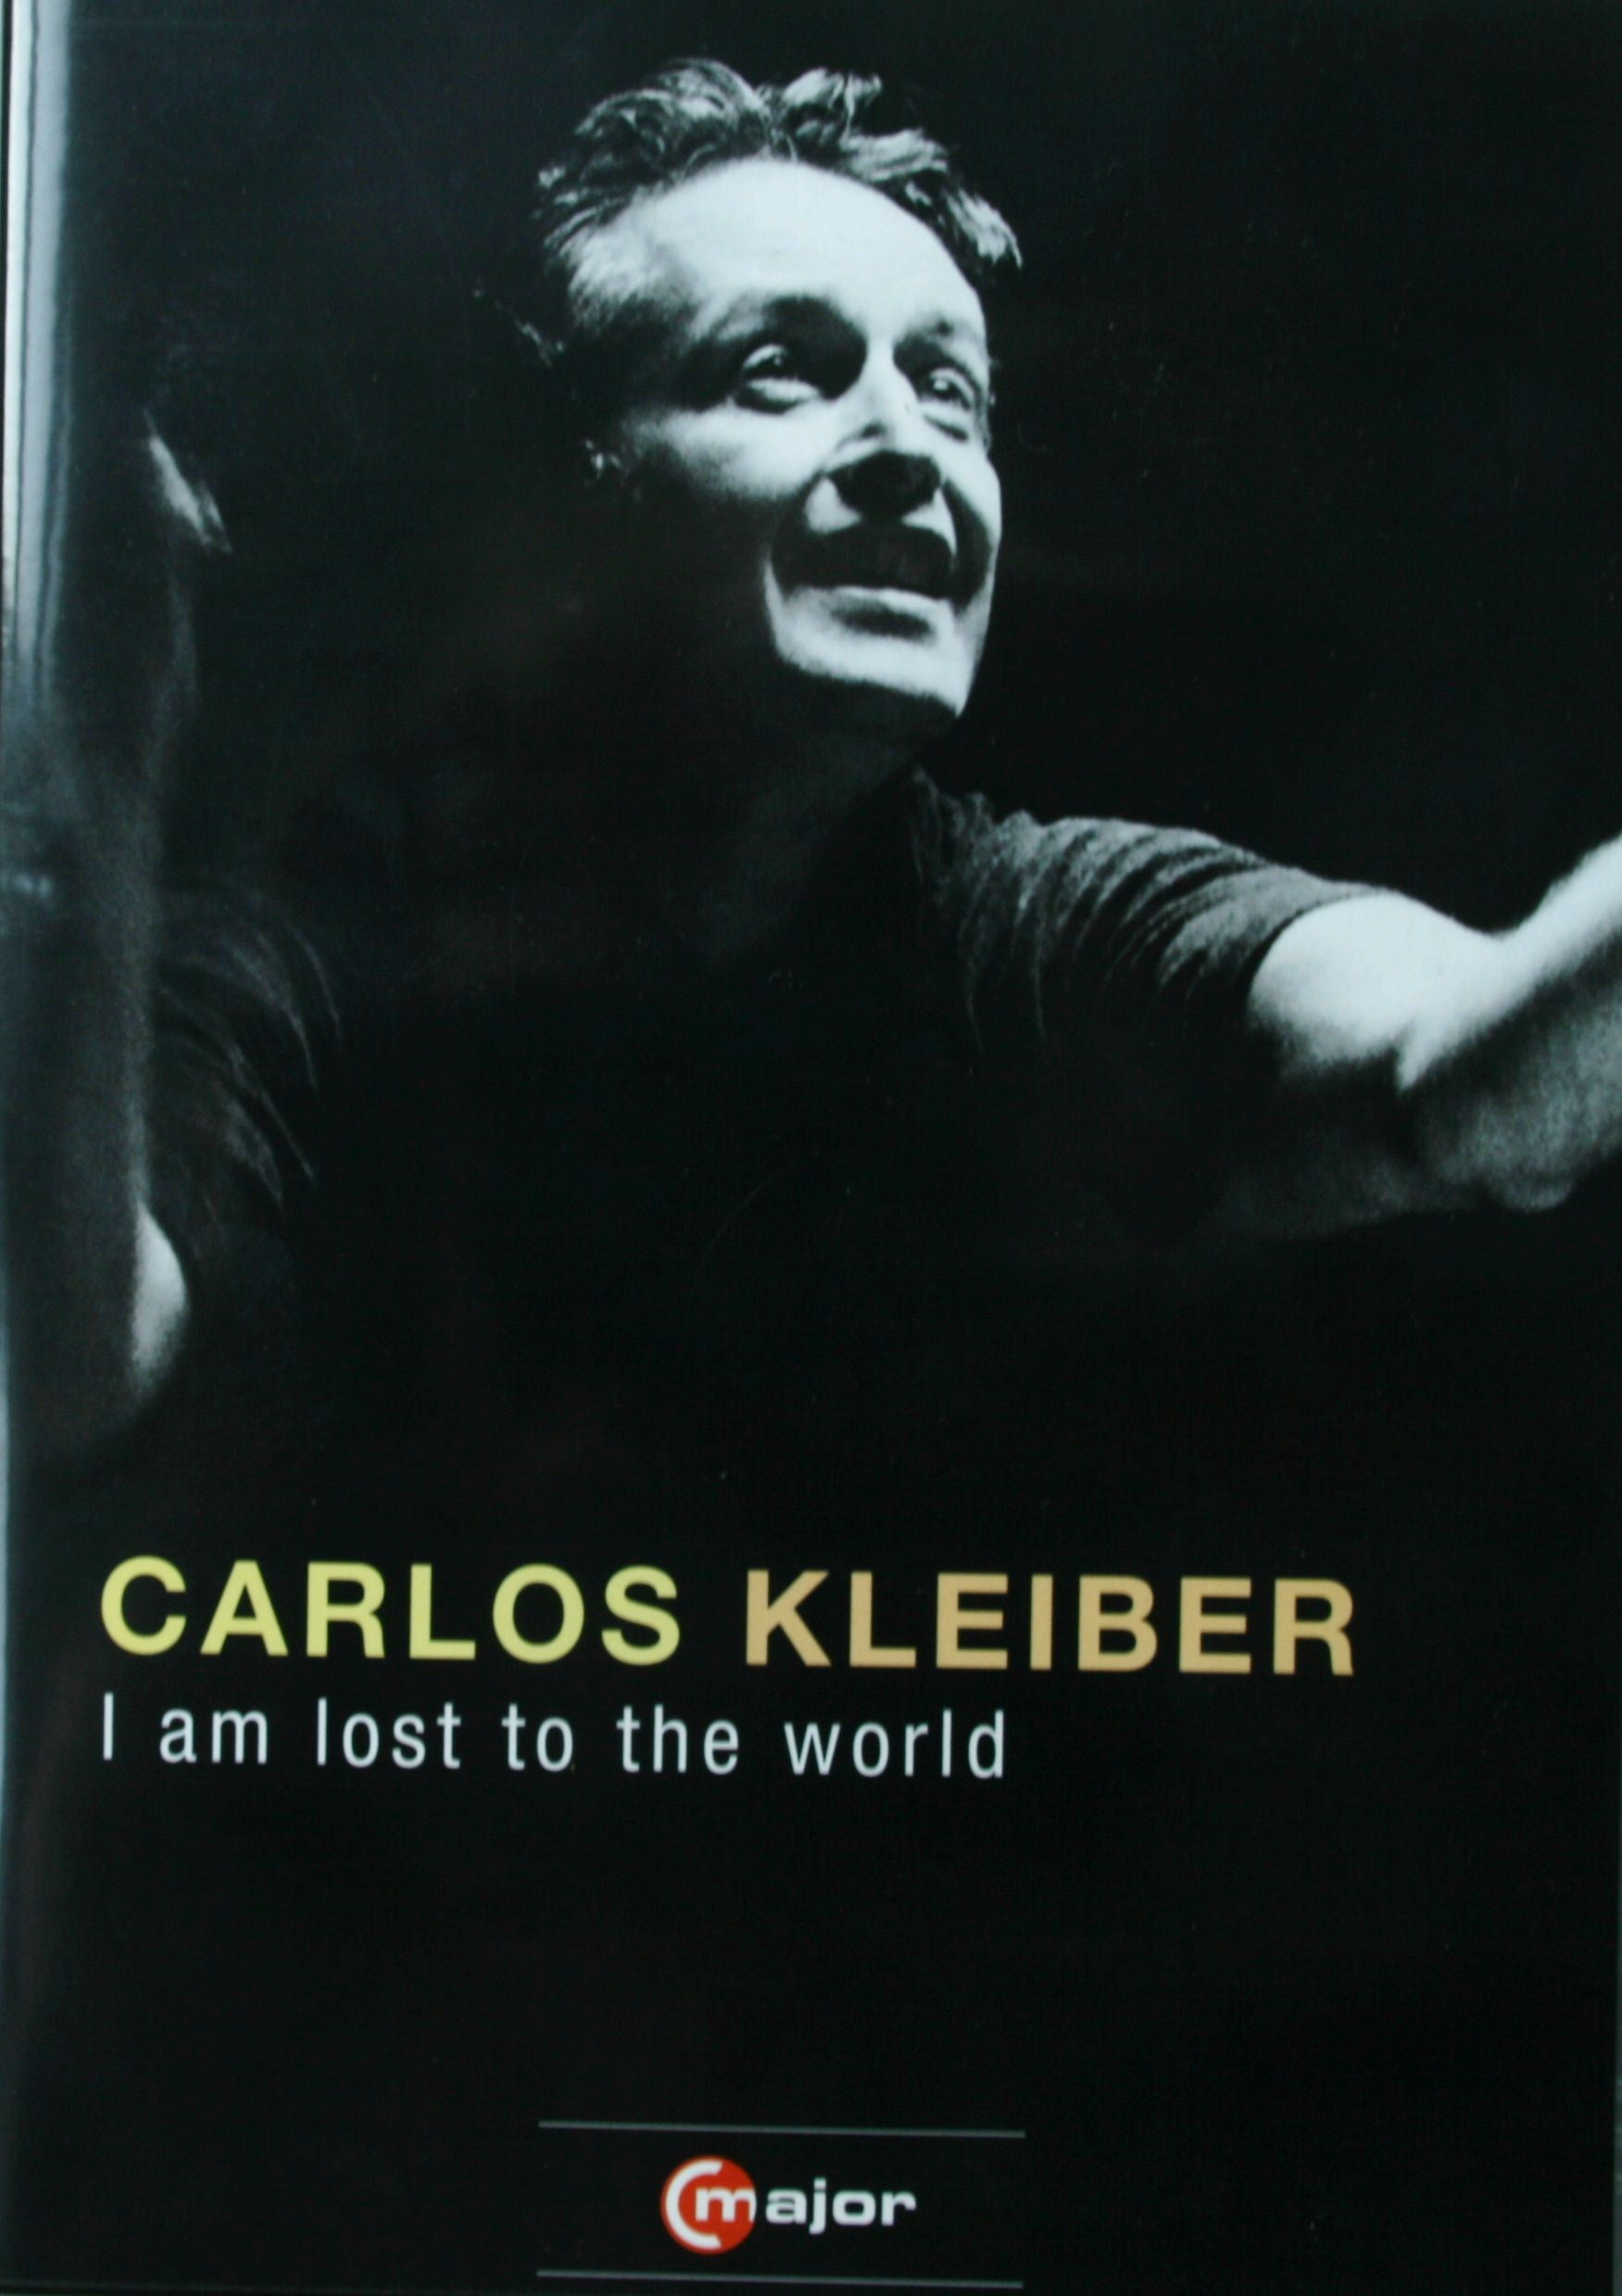 Kleiber DVD.JPG